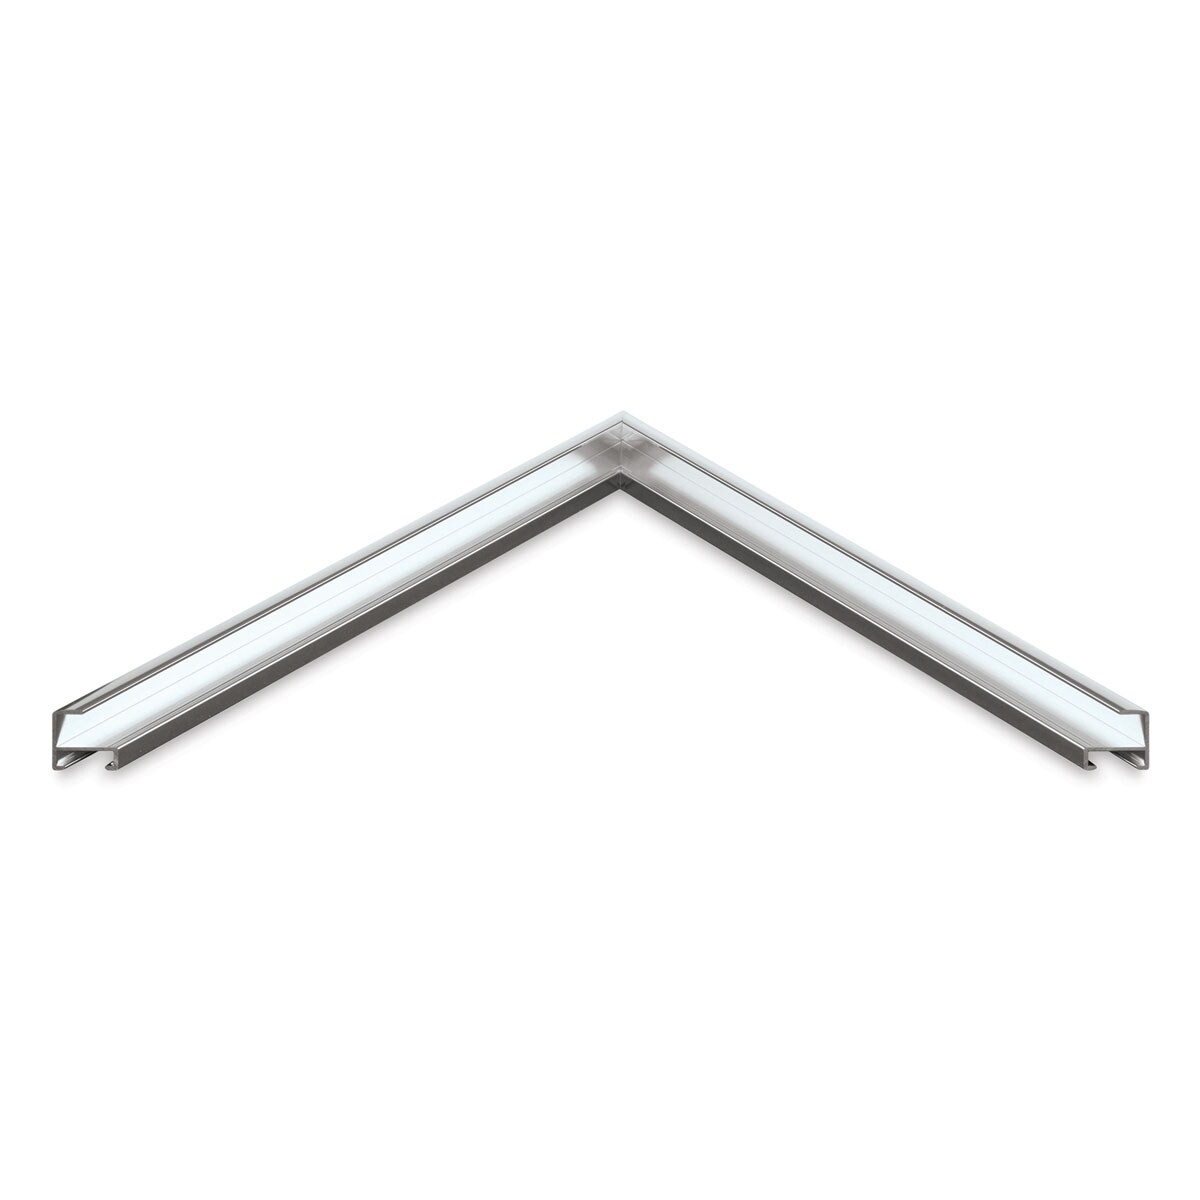 Nielsen Bainbridge Metal Frame Kit-18&#x201D; x 7/16&#x201D;, Silver, 2 Bars